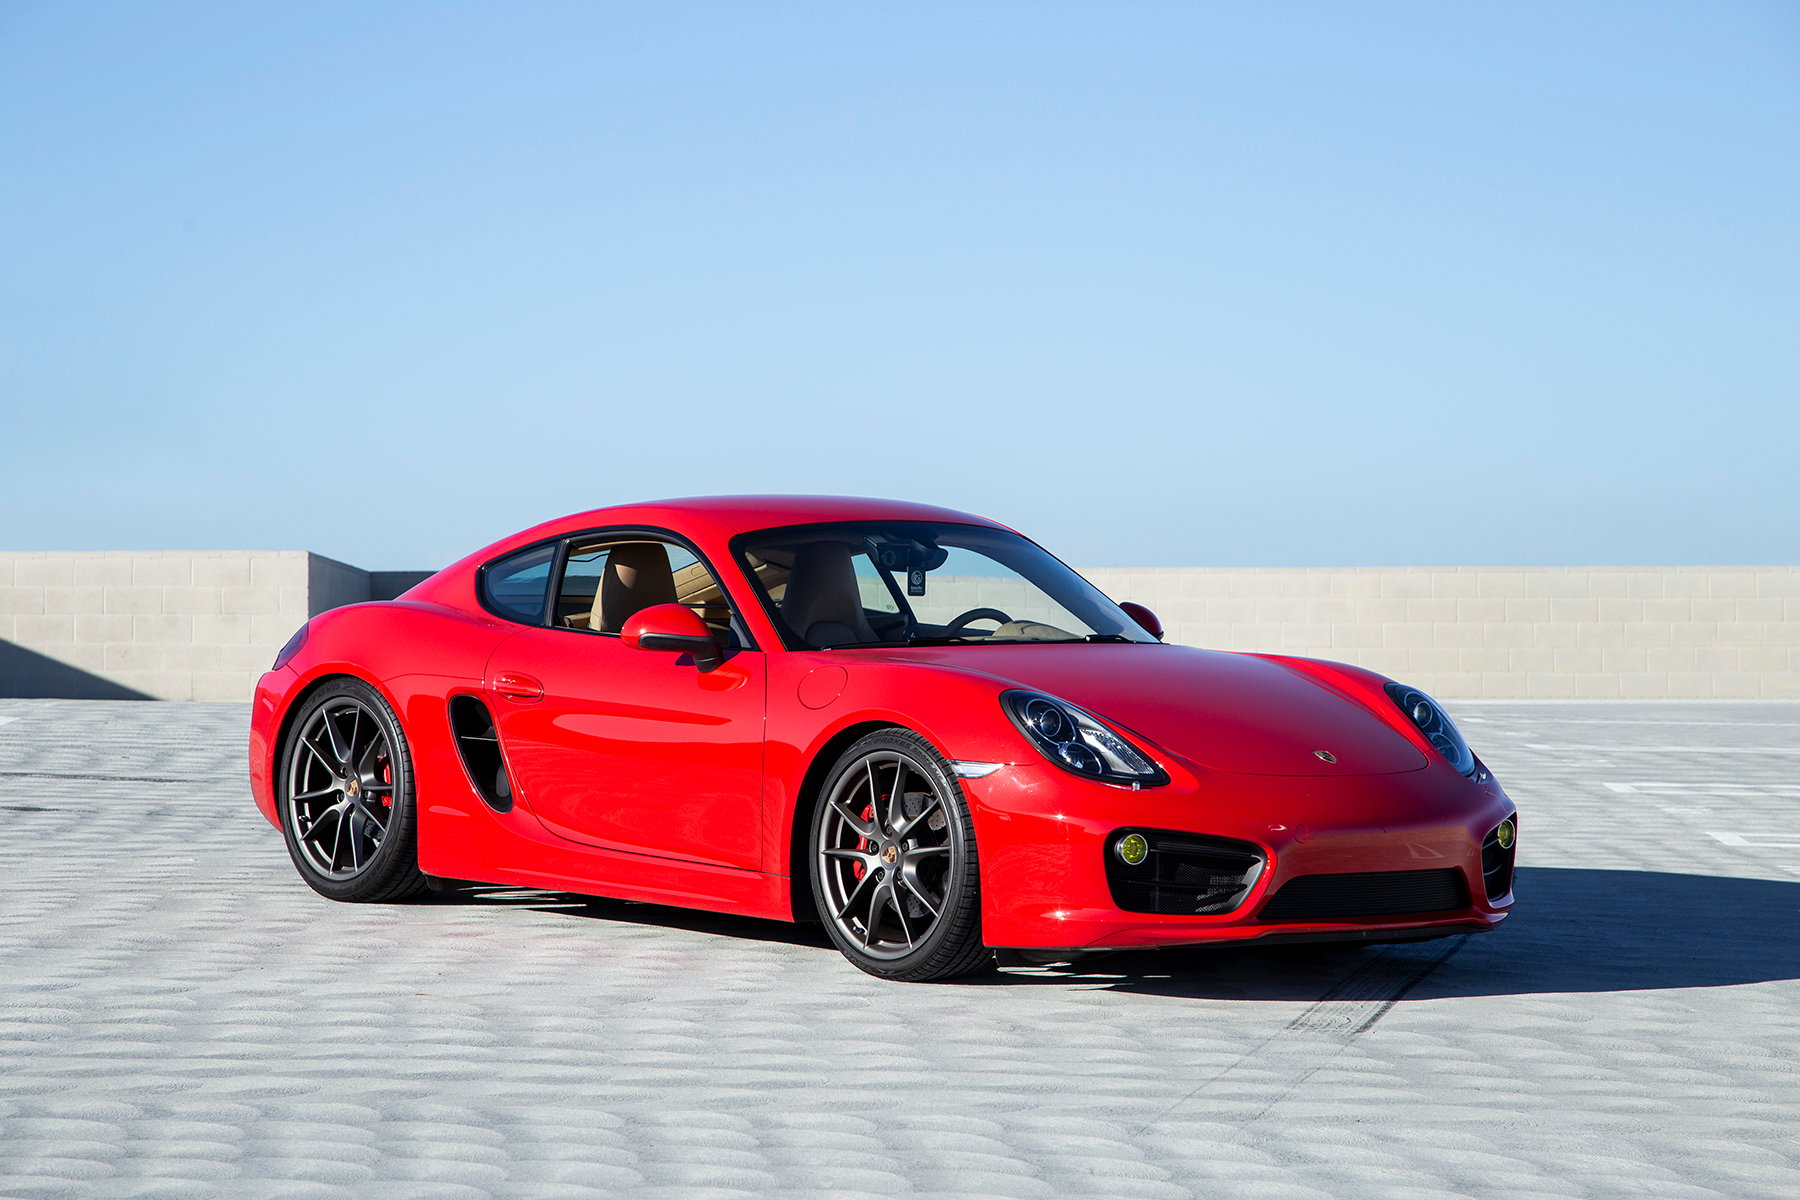 2014 Porsche Cayman - 2014 Cayman S - Guards Red, 23k miles, 6-speed, PTV, PASM, Apple Carplay, DSC'ed - Used - VIN WP0AB2A88EK193699 - Irvine, CA 92614, United States